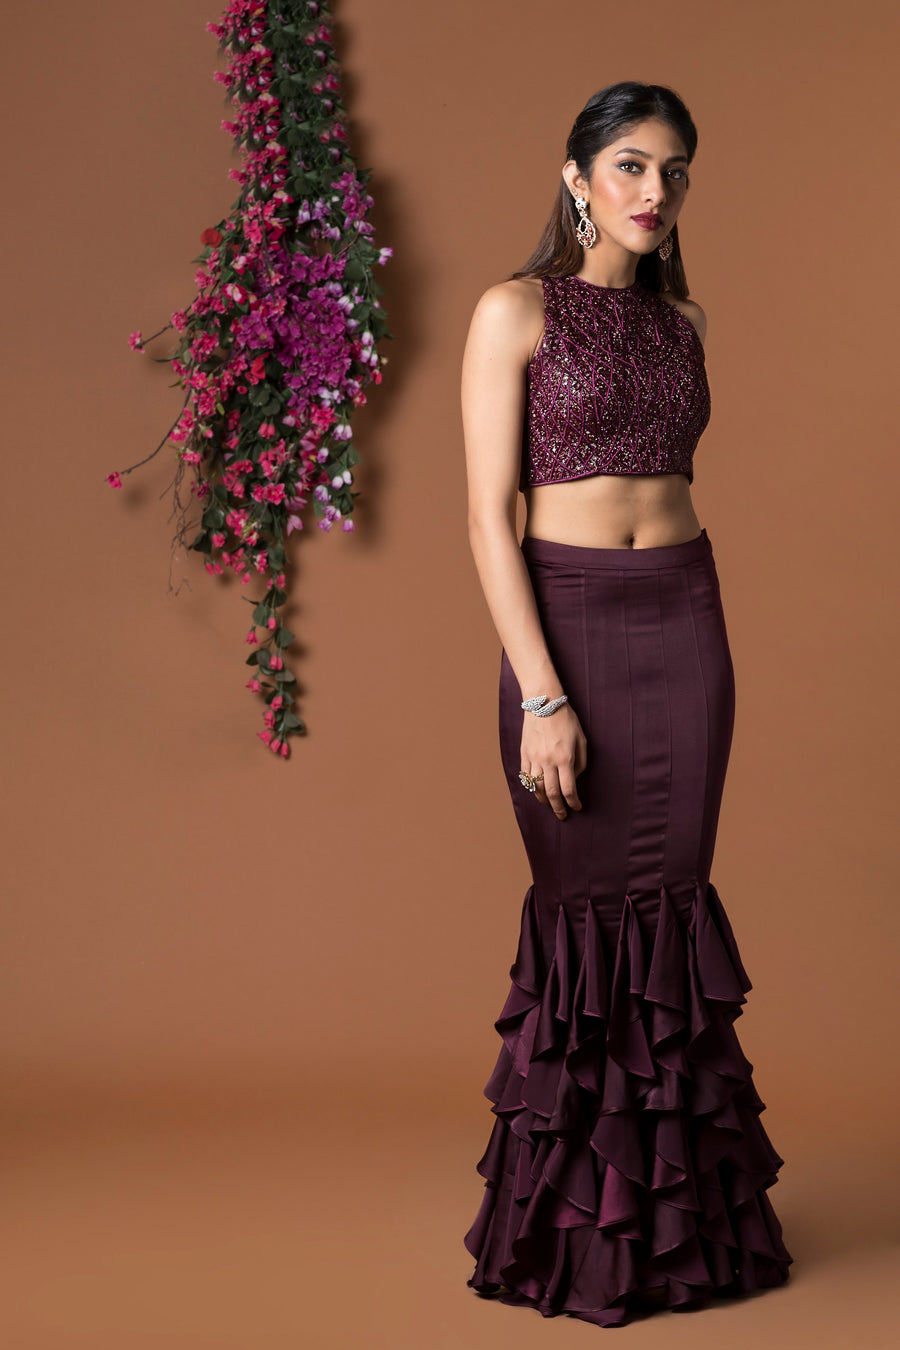 Mehak Murpana | Ruffle Skirt & Crop Top | Indian Wedding Wear for sangeet & mehndi.